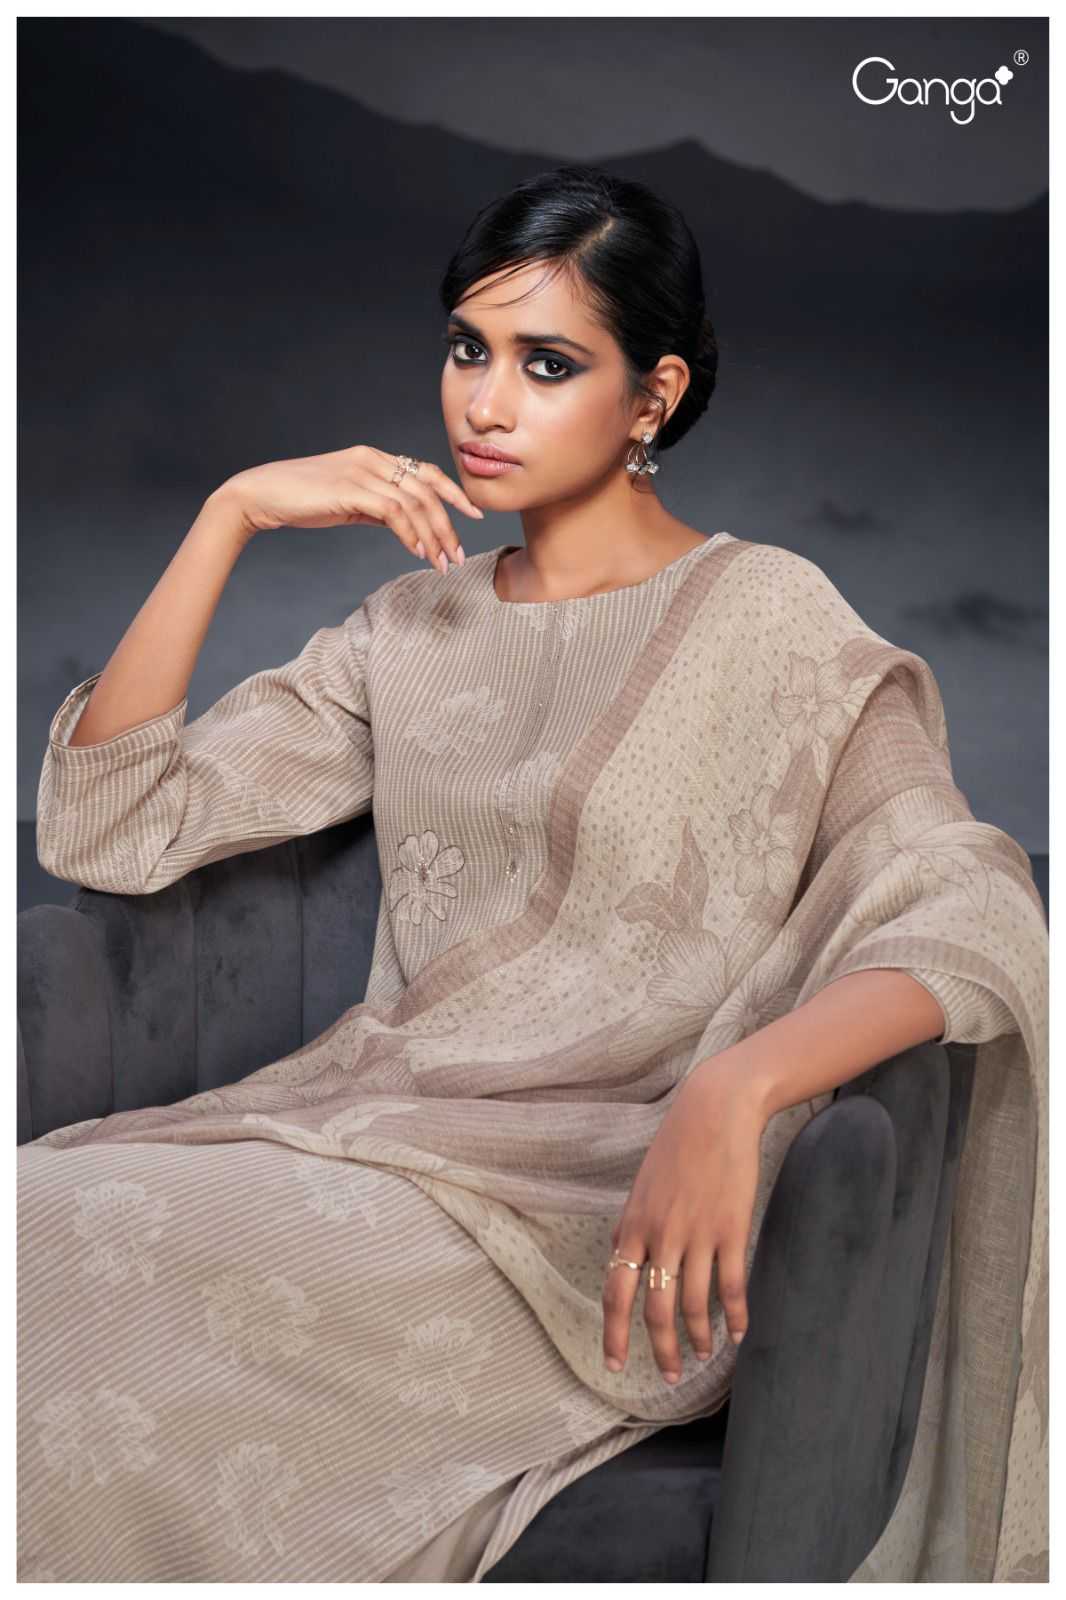 Ganga KILAH 2402 Dress Materials Wholesale catalog